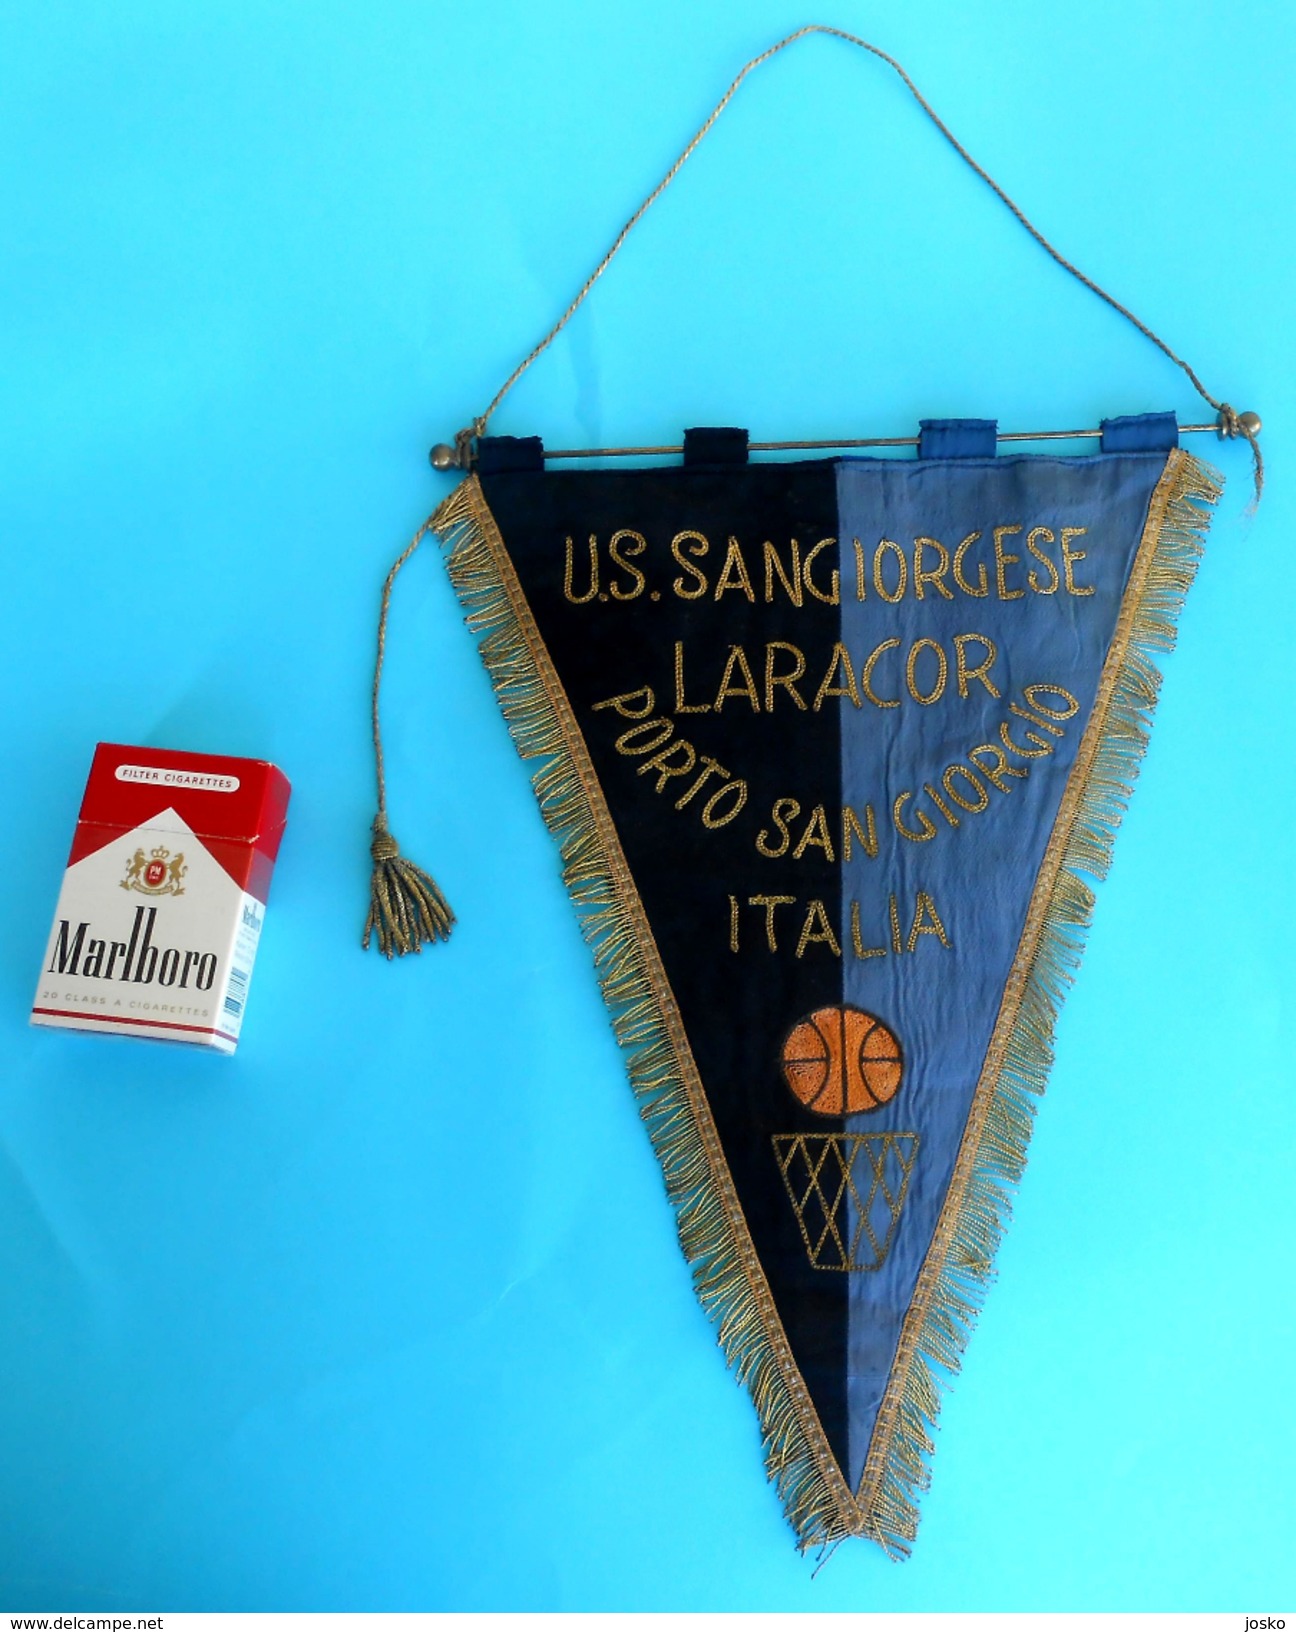 US SANGIORGESE PORTO SAN GIORGIO Marche - Italy Basketball Vintage Pennant Fanion Flag Bandierina Pallacanestro Italia - Abbigliamento, Souvenirs & Varie